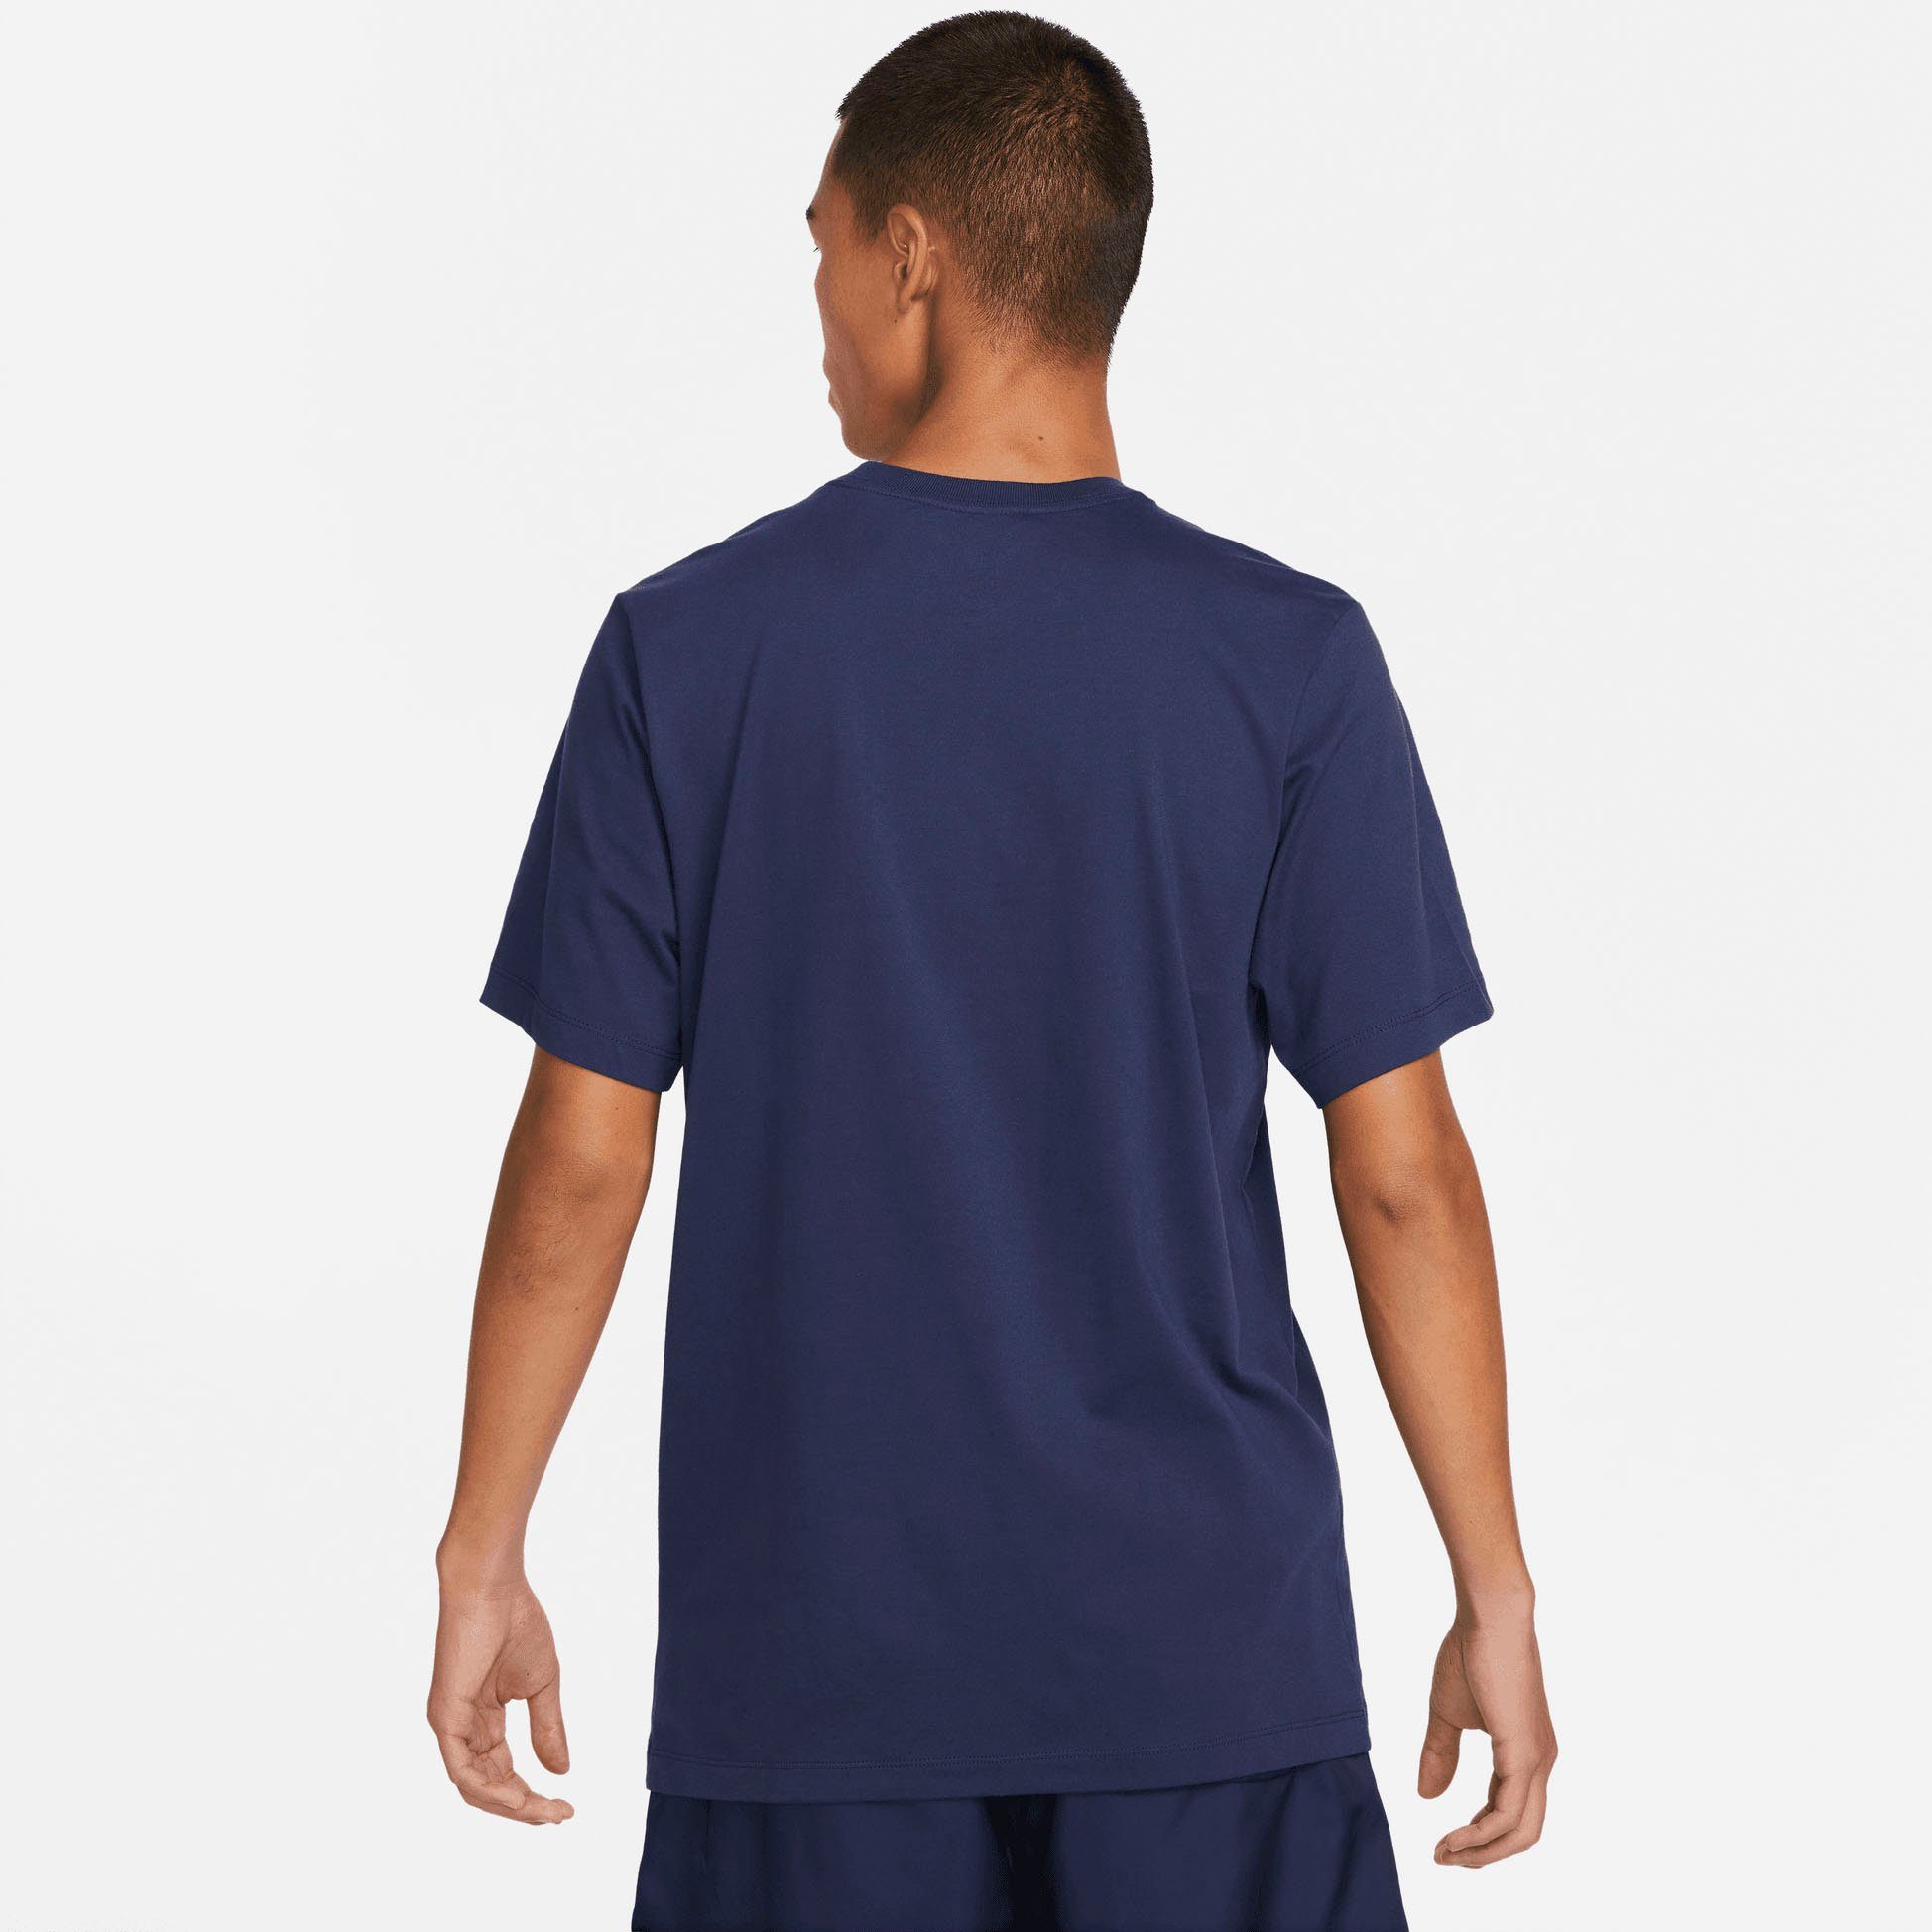 Nike NAVY MIDNIGHT Men's Sportswear T-Shirt T-Shirt